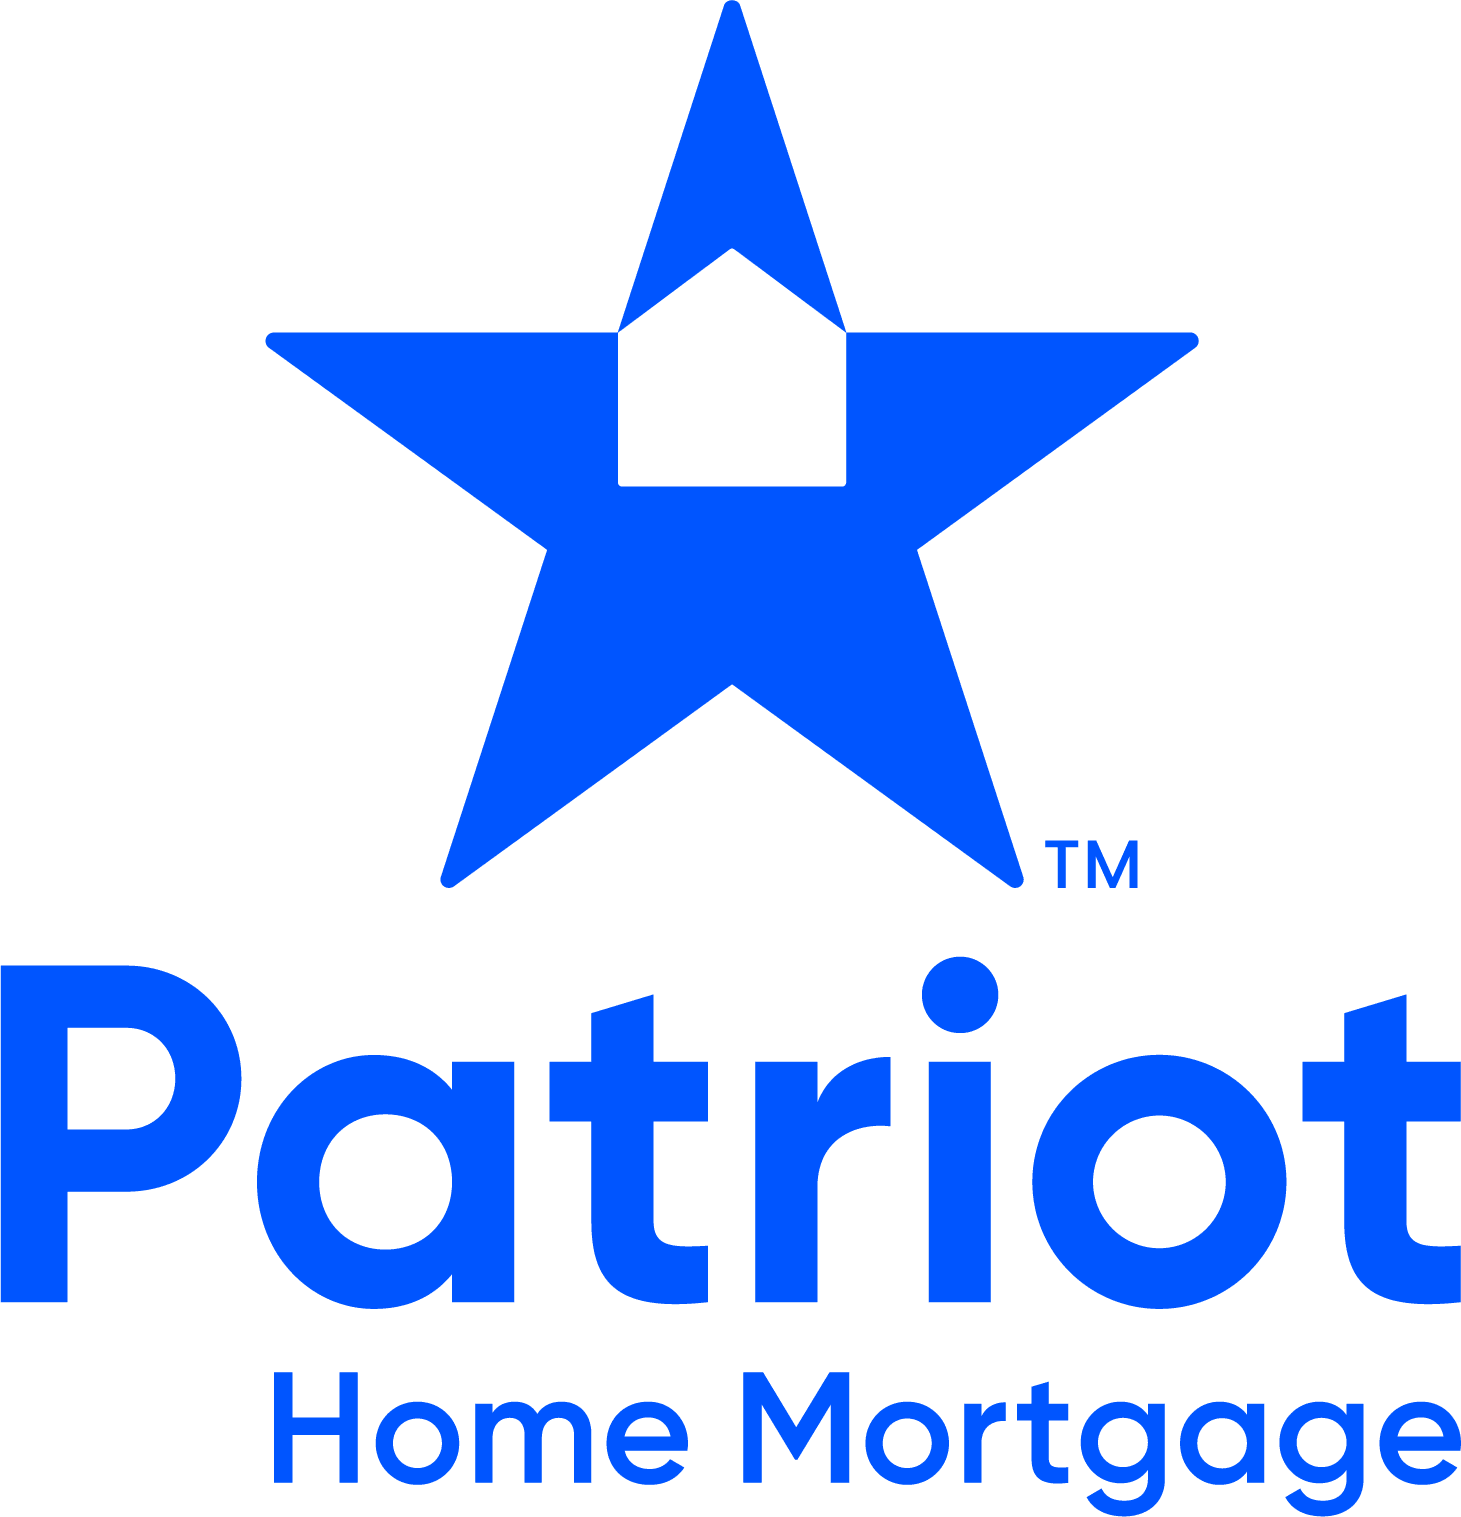 Patriot Logo